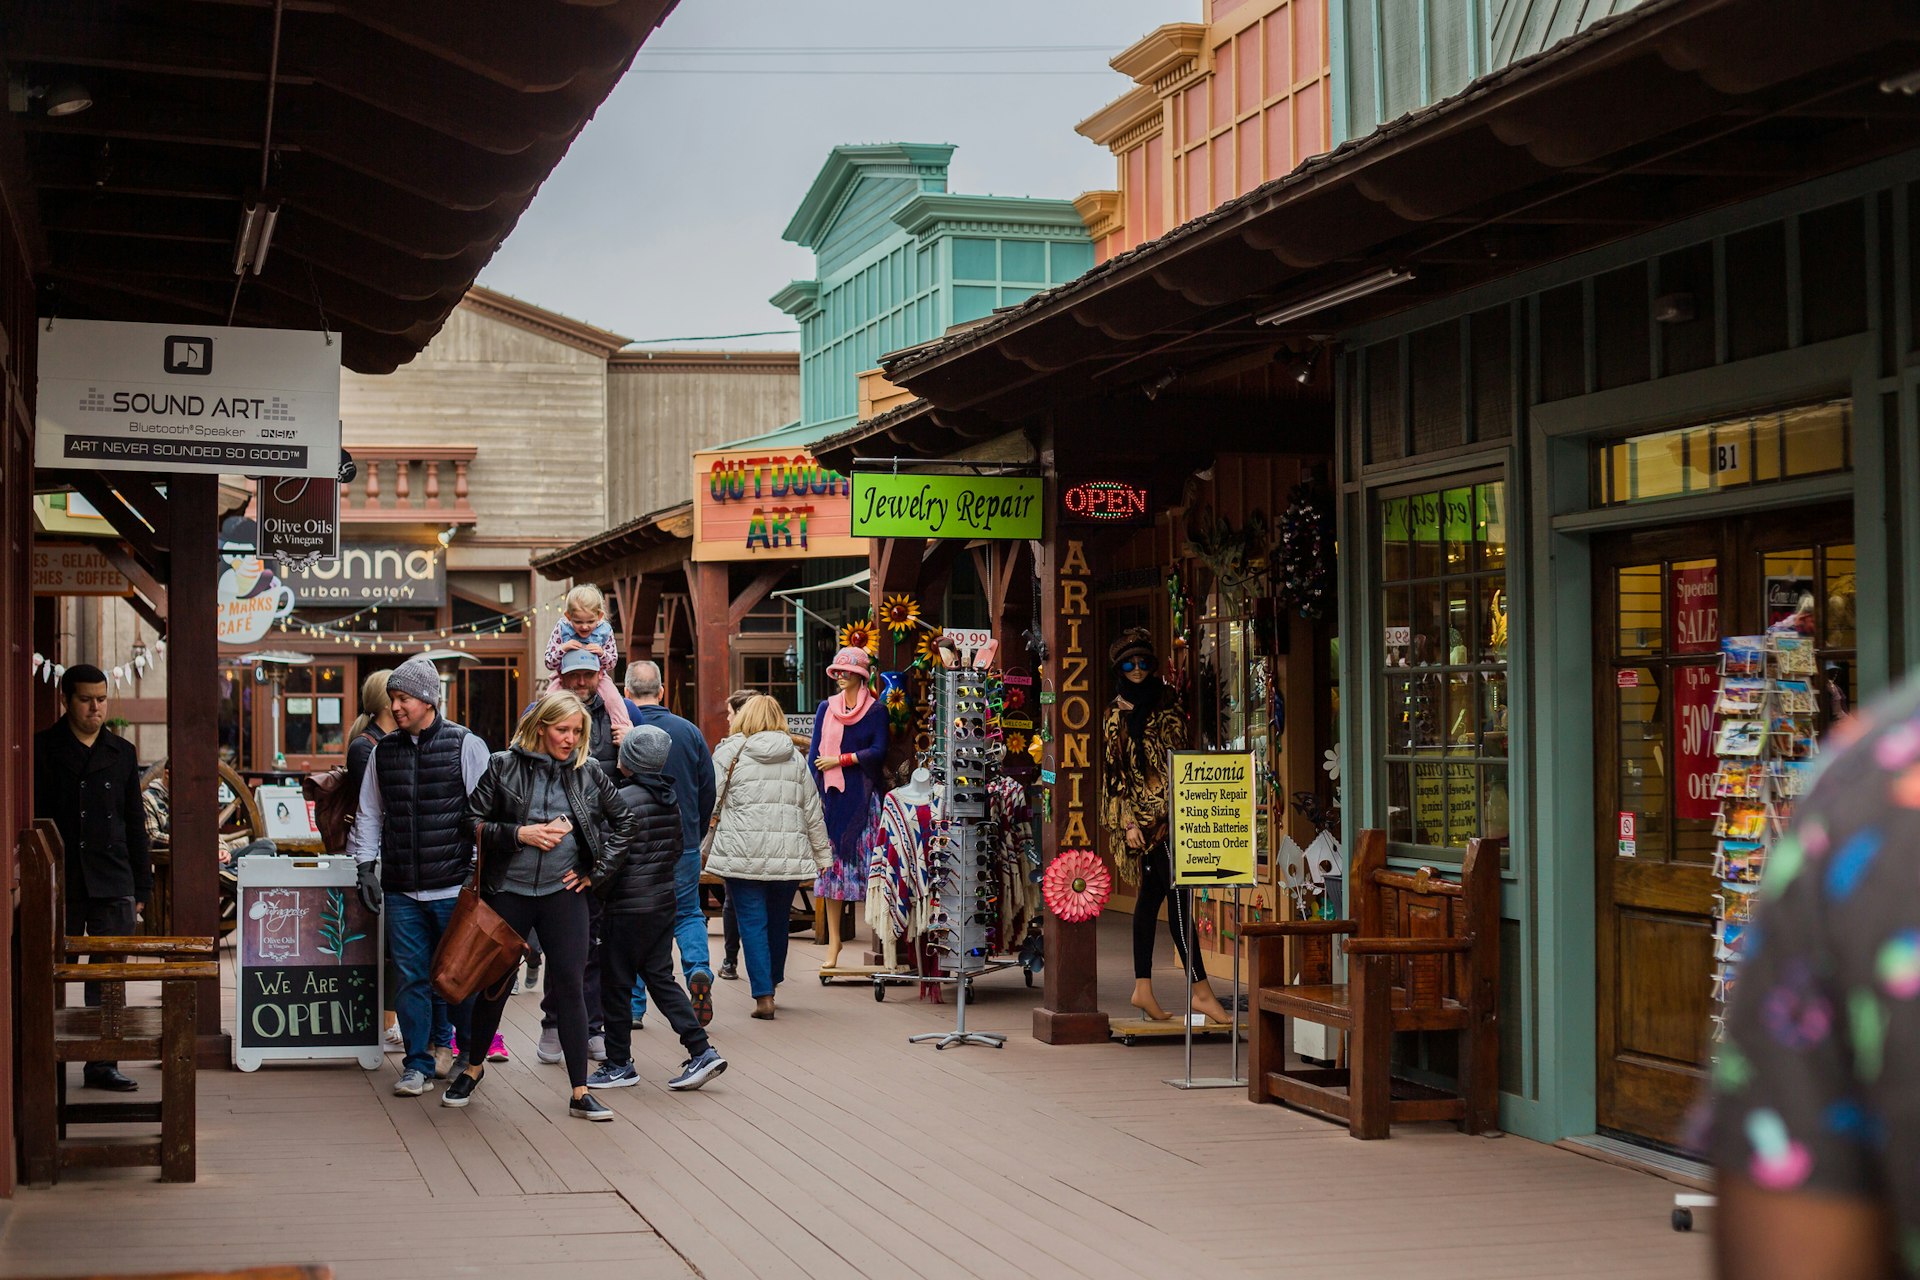 Pedestrians walk through a bustling Old Town Scottsdale street known for its souvenir shops